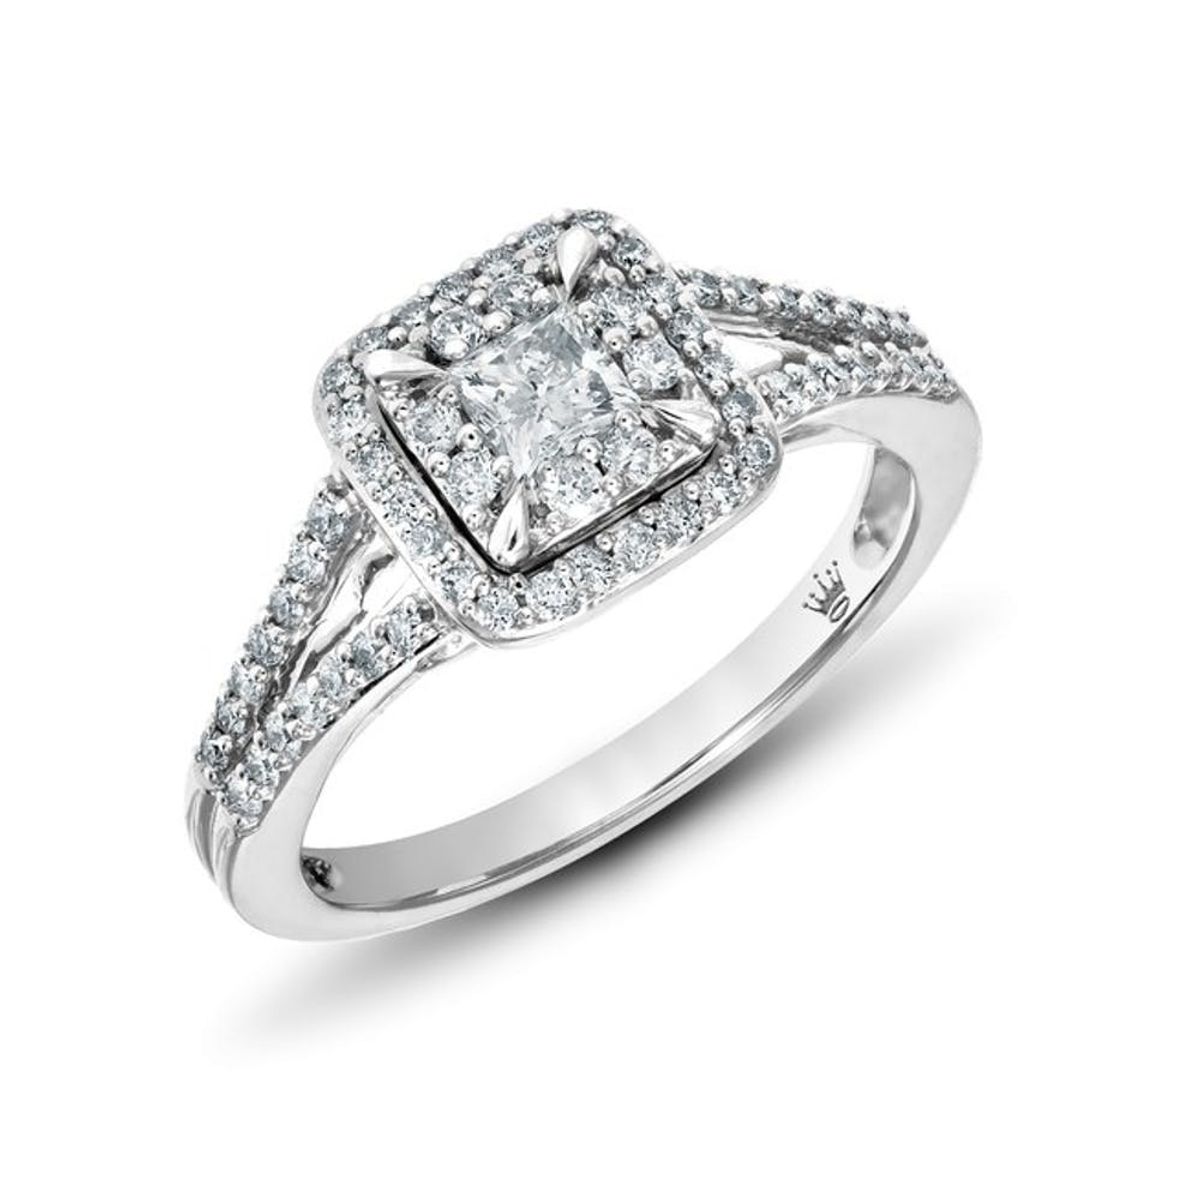 Hallmark Is Now Designing (Stunning!) Engagement Rings